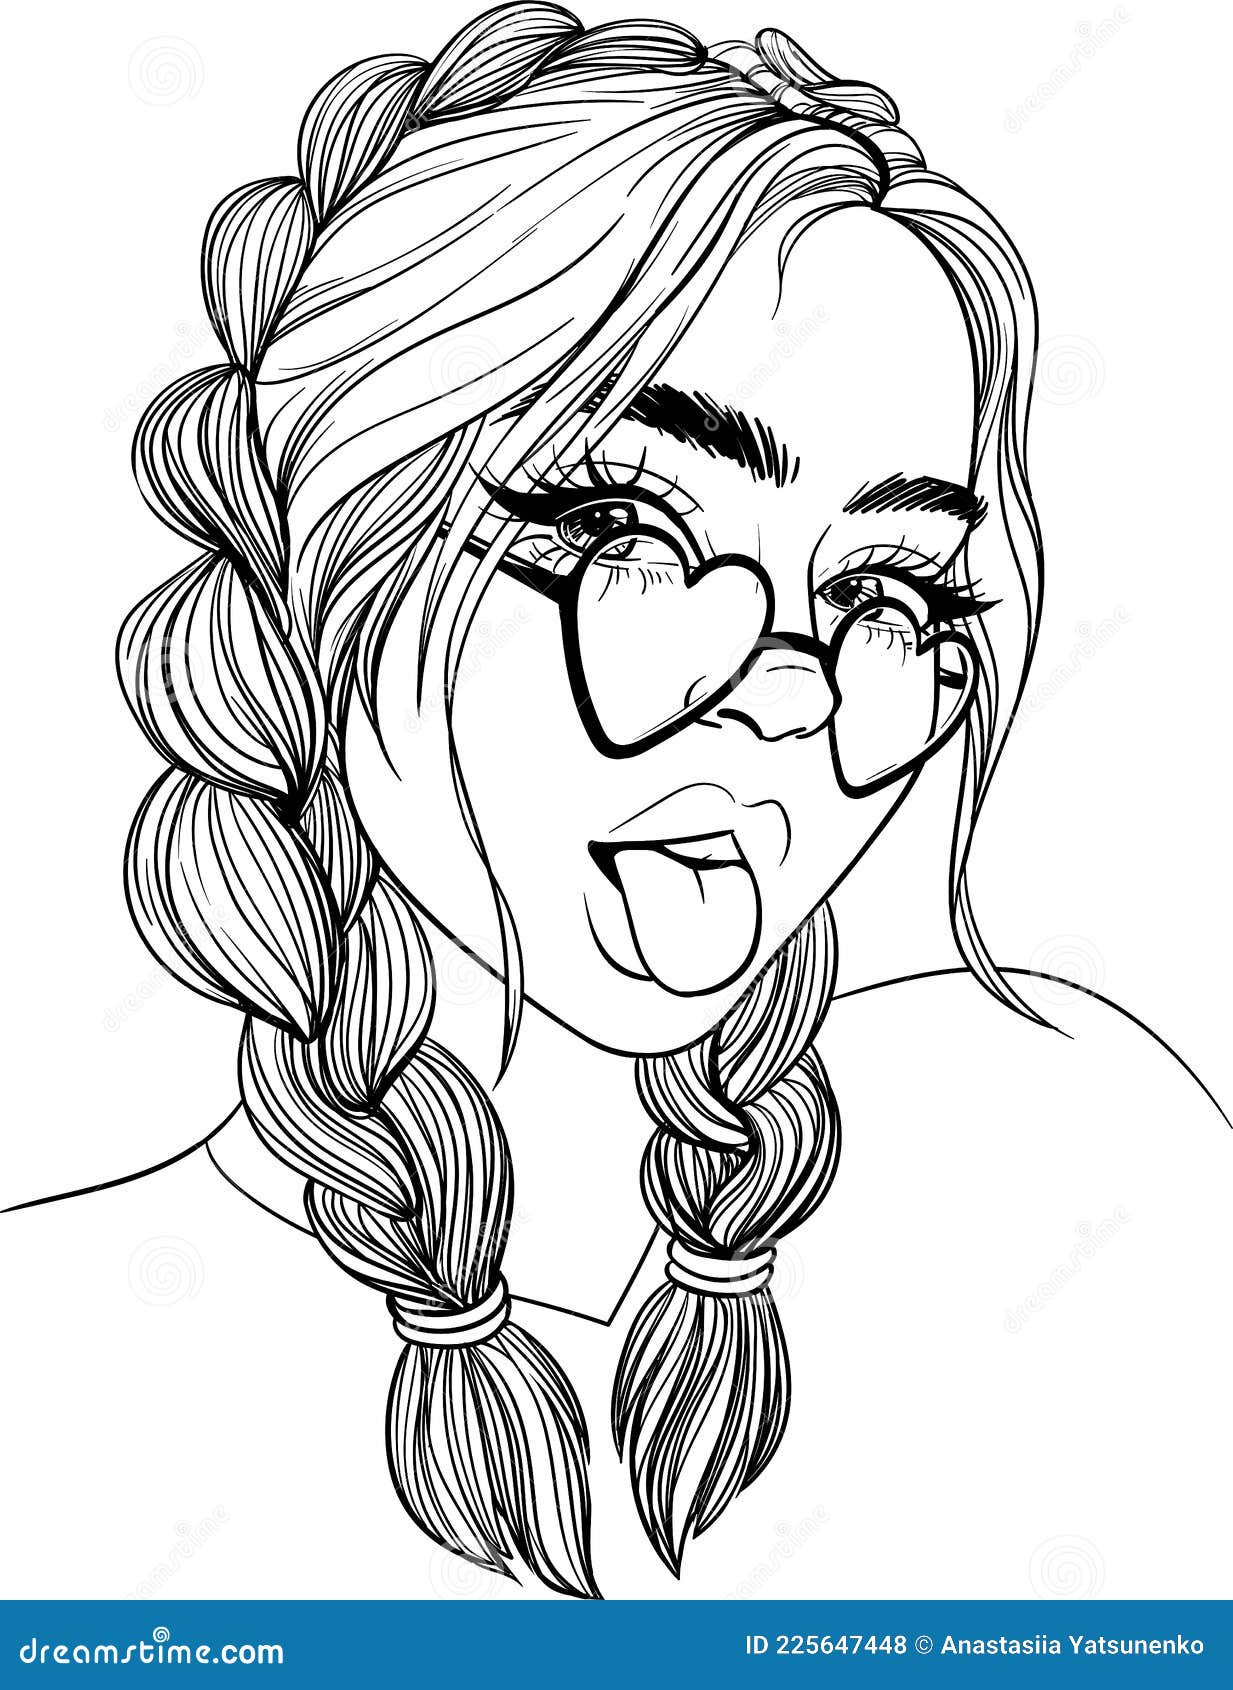 https://thumbs.dreamstime.com/z/line-drawing-girl-black-outline-glasses-beautiful-225647448.jpg